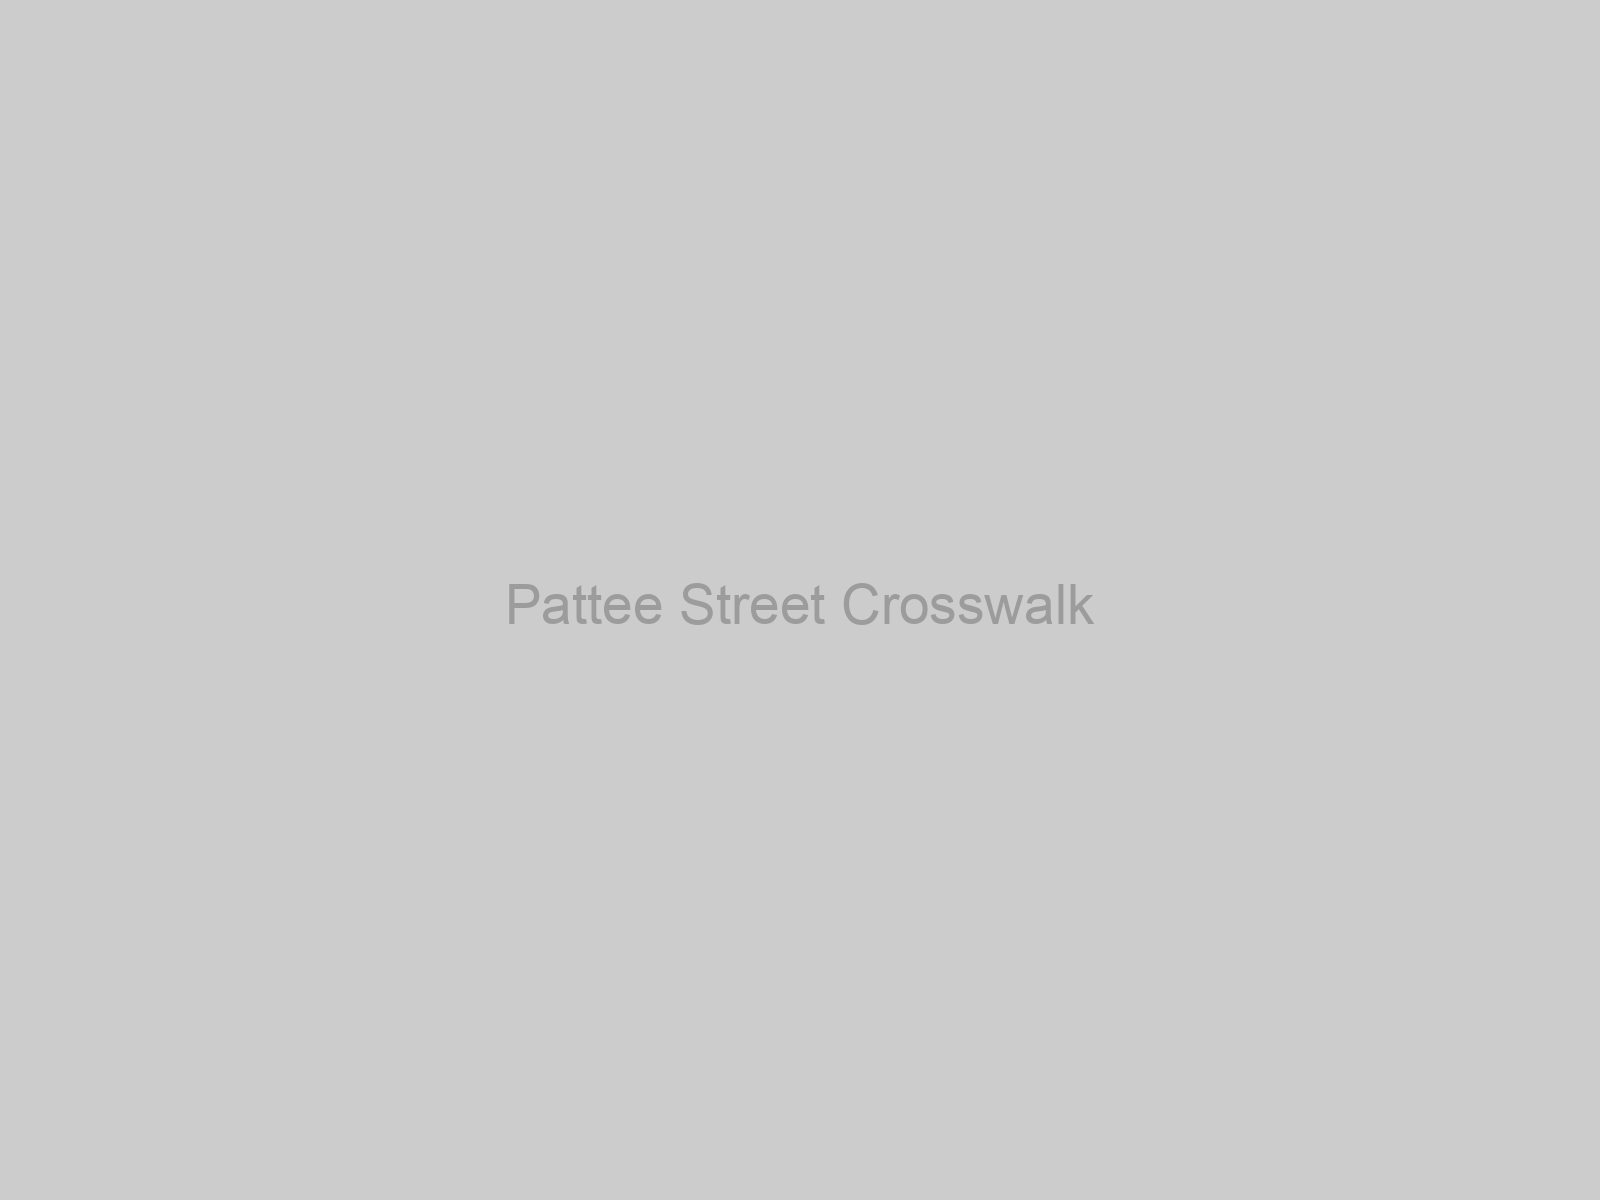 Pattee Street Crosswalk